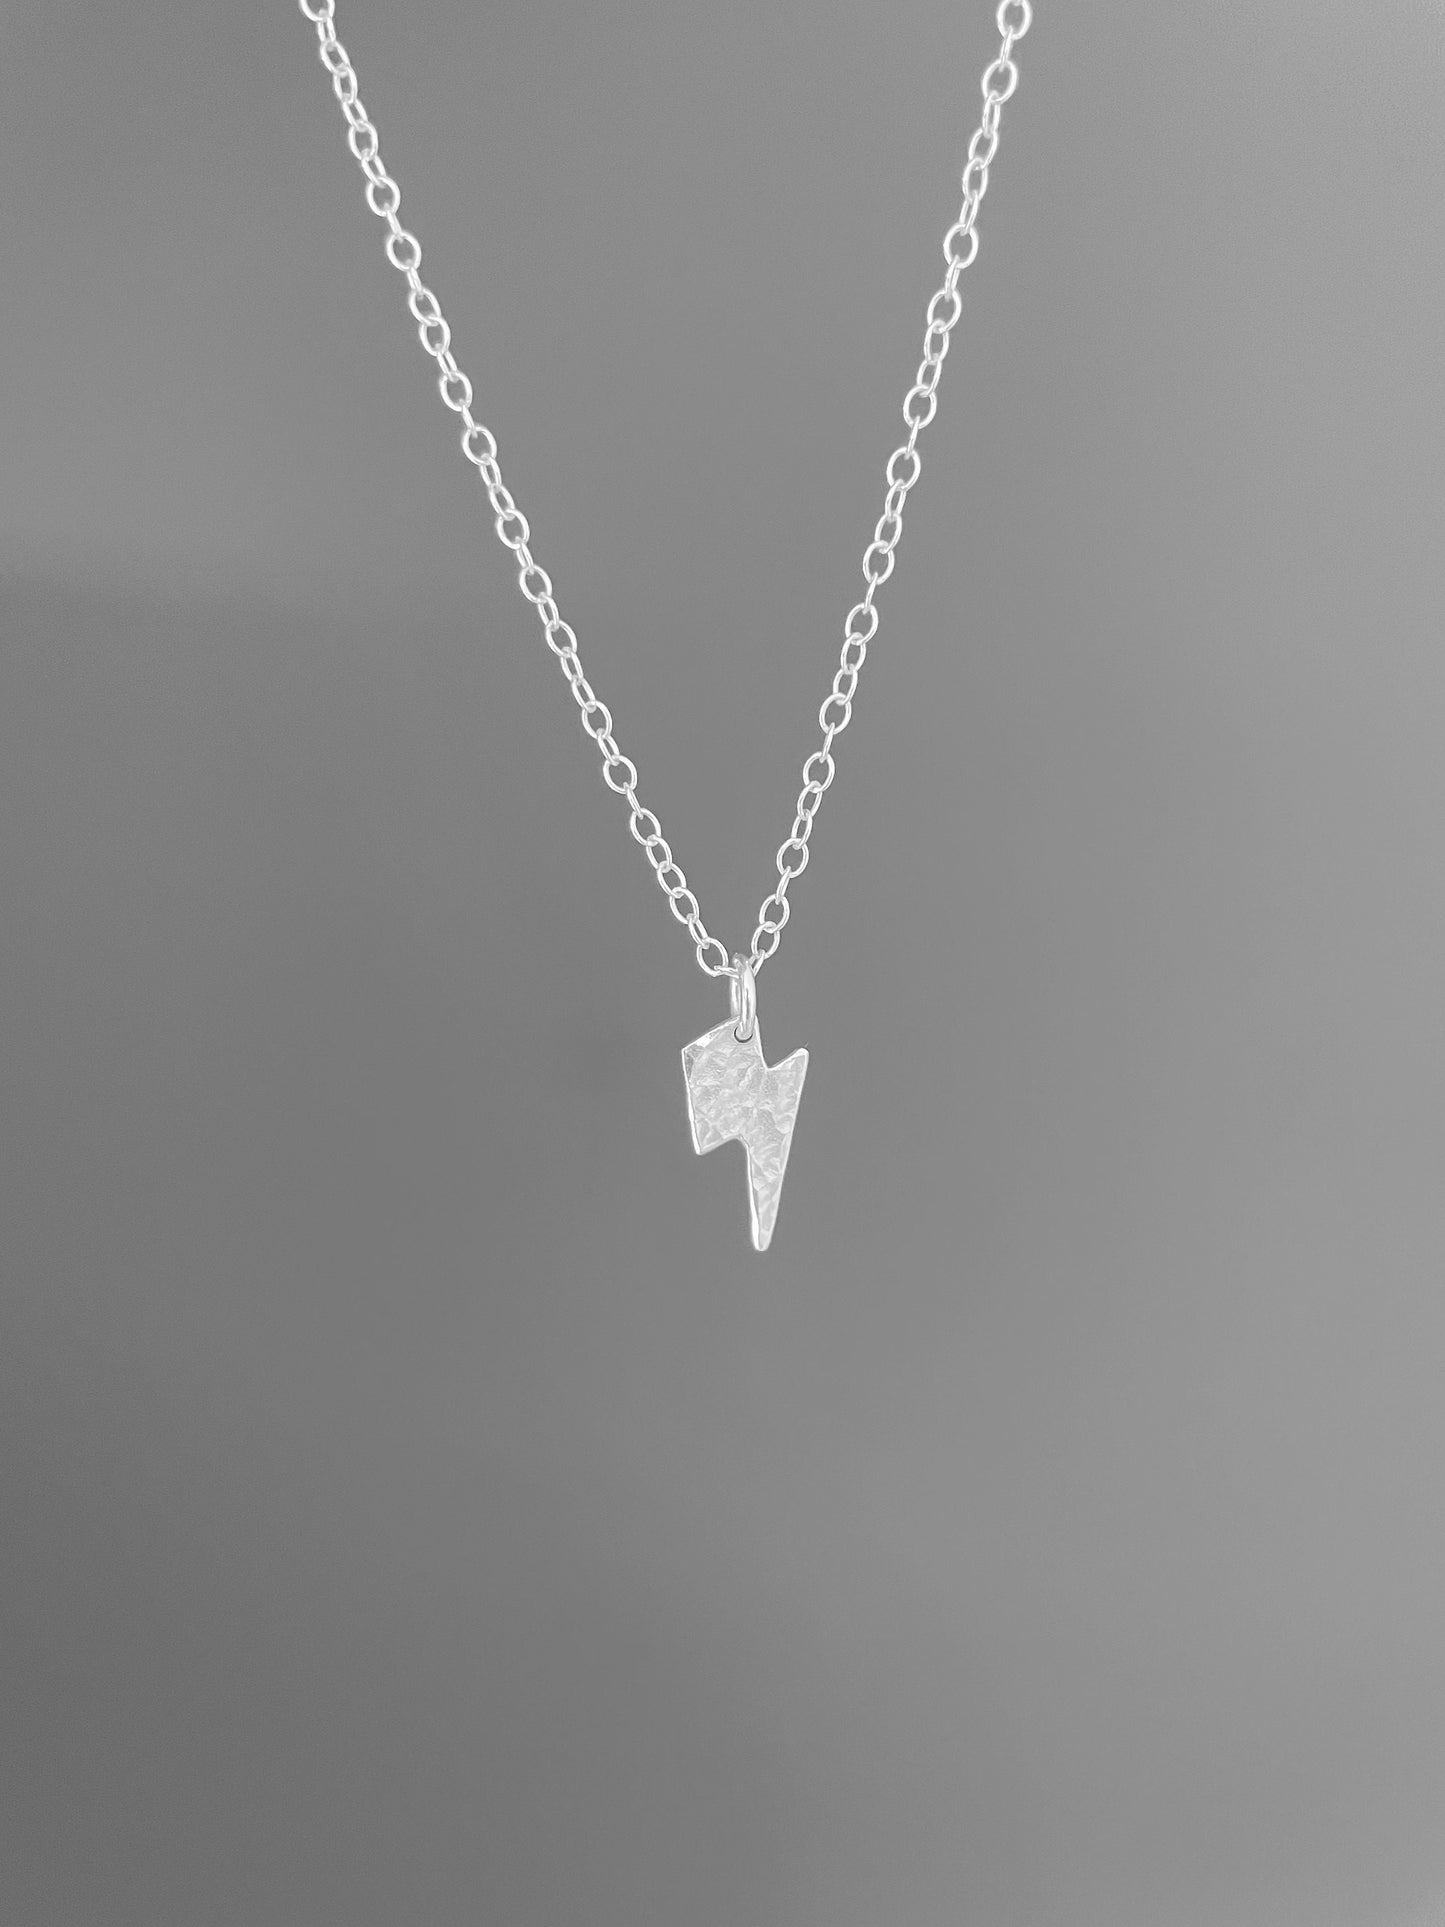 Small silver lightning bolt necklace